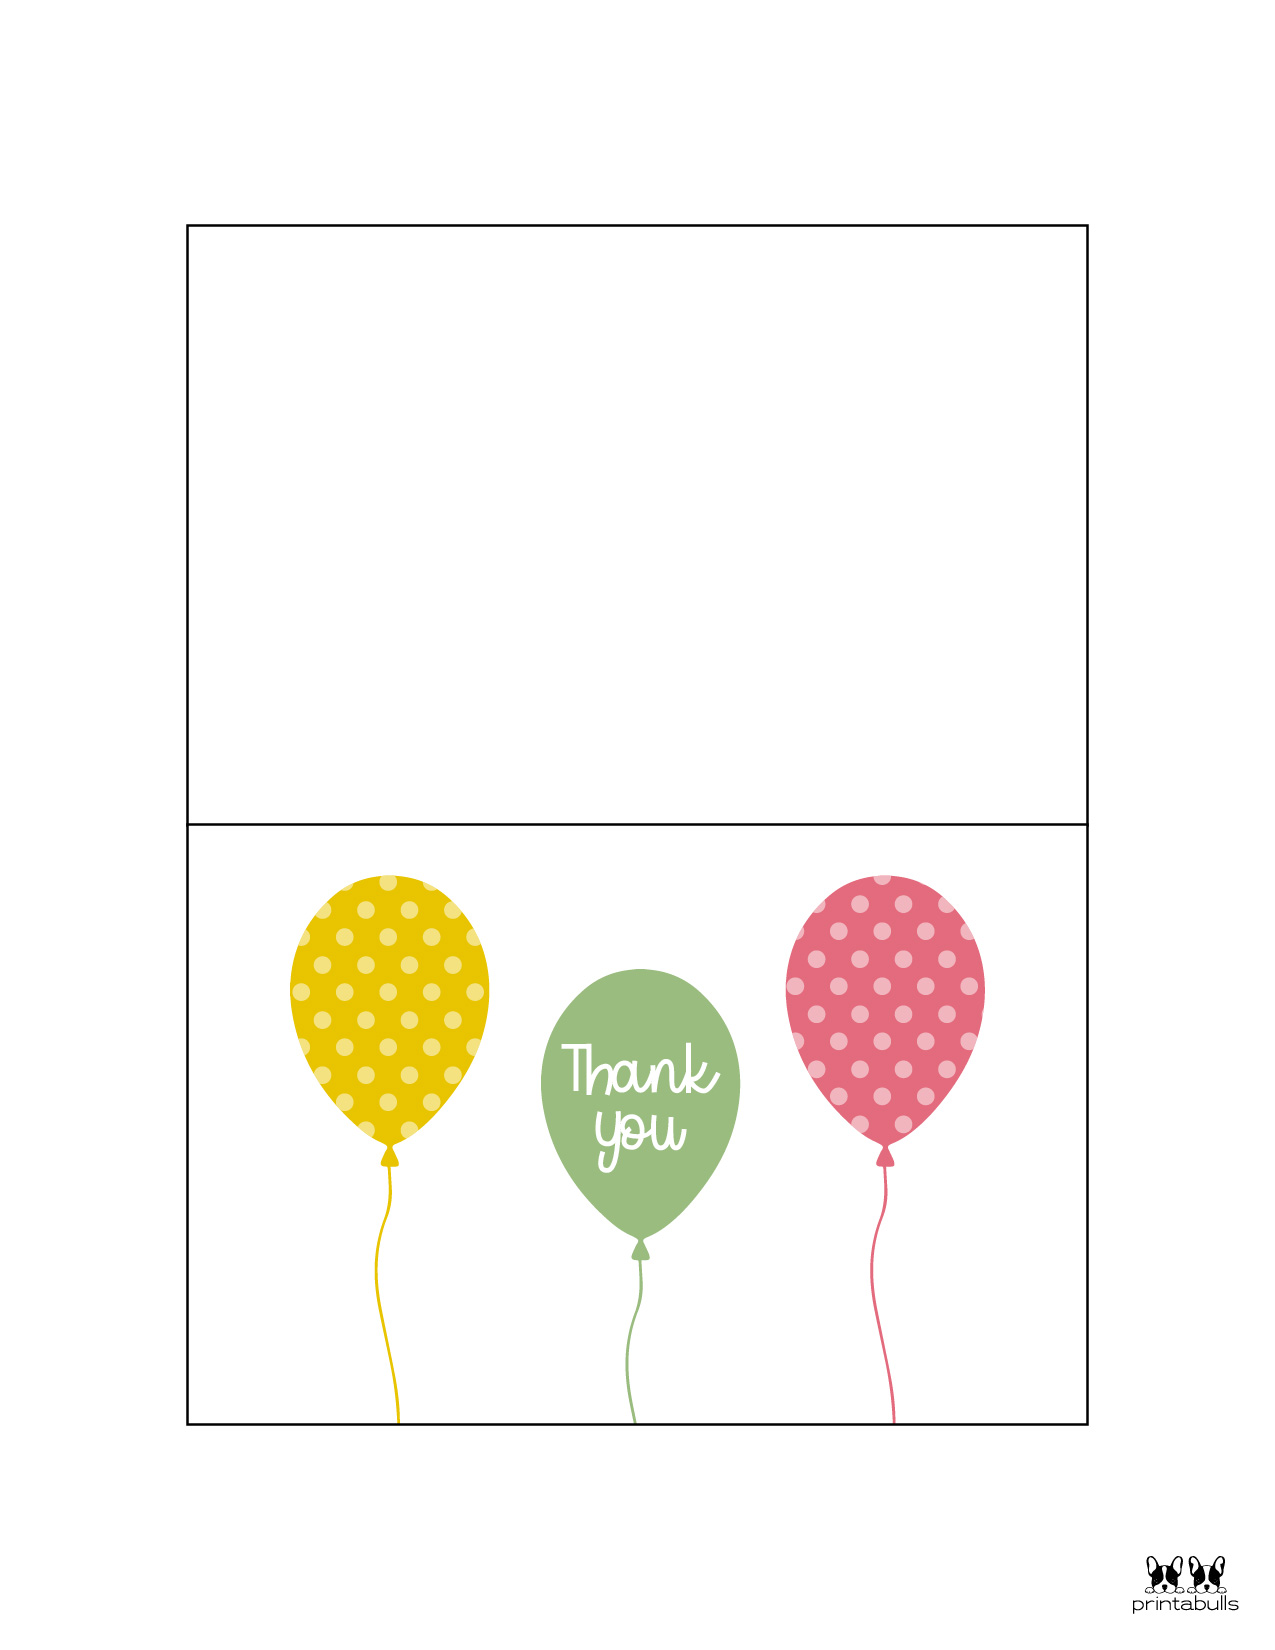 birthday thank you cards birthday printable - birthday thank you cards birthday printable | printable birthday thank you cards